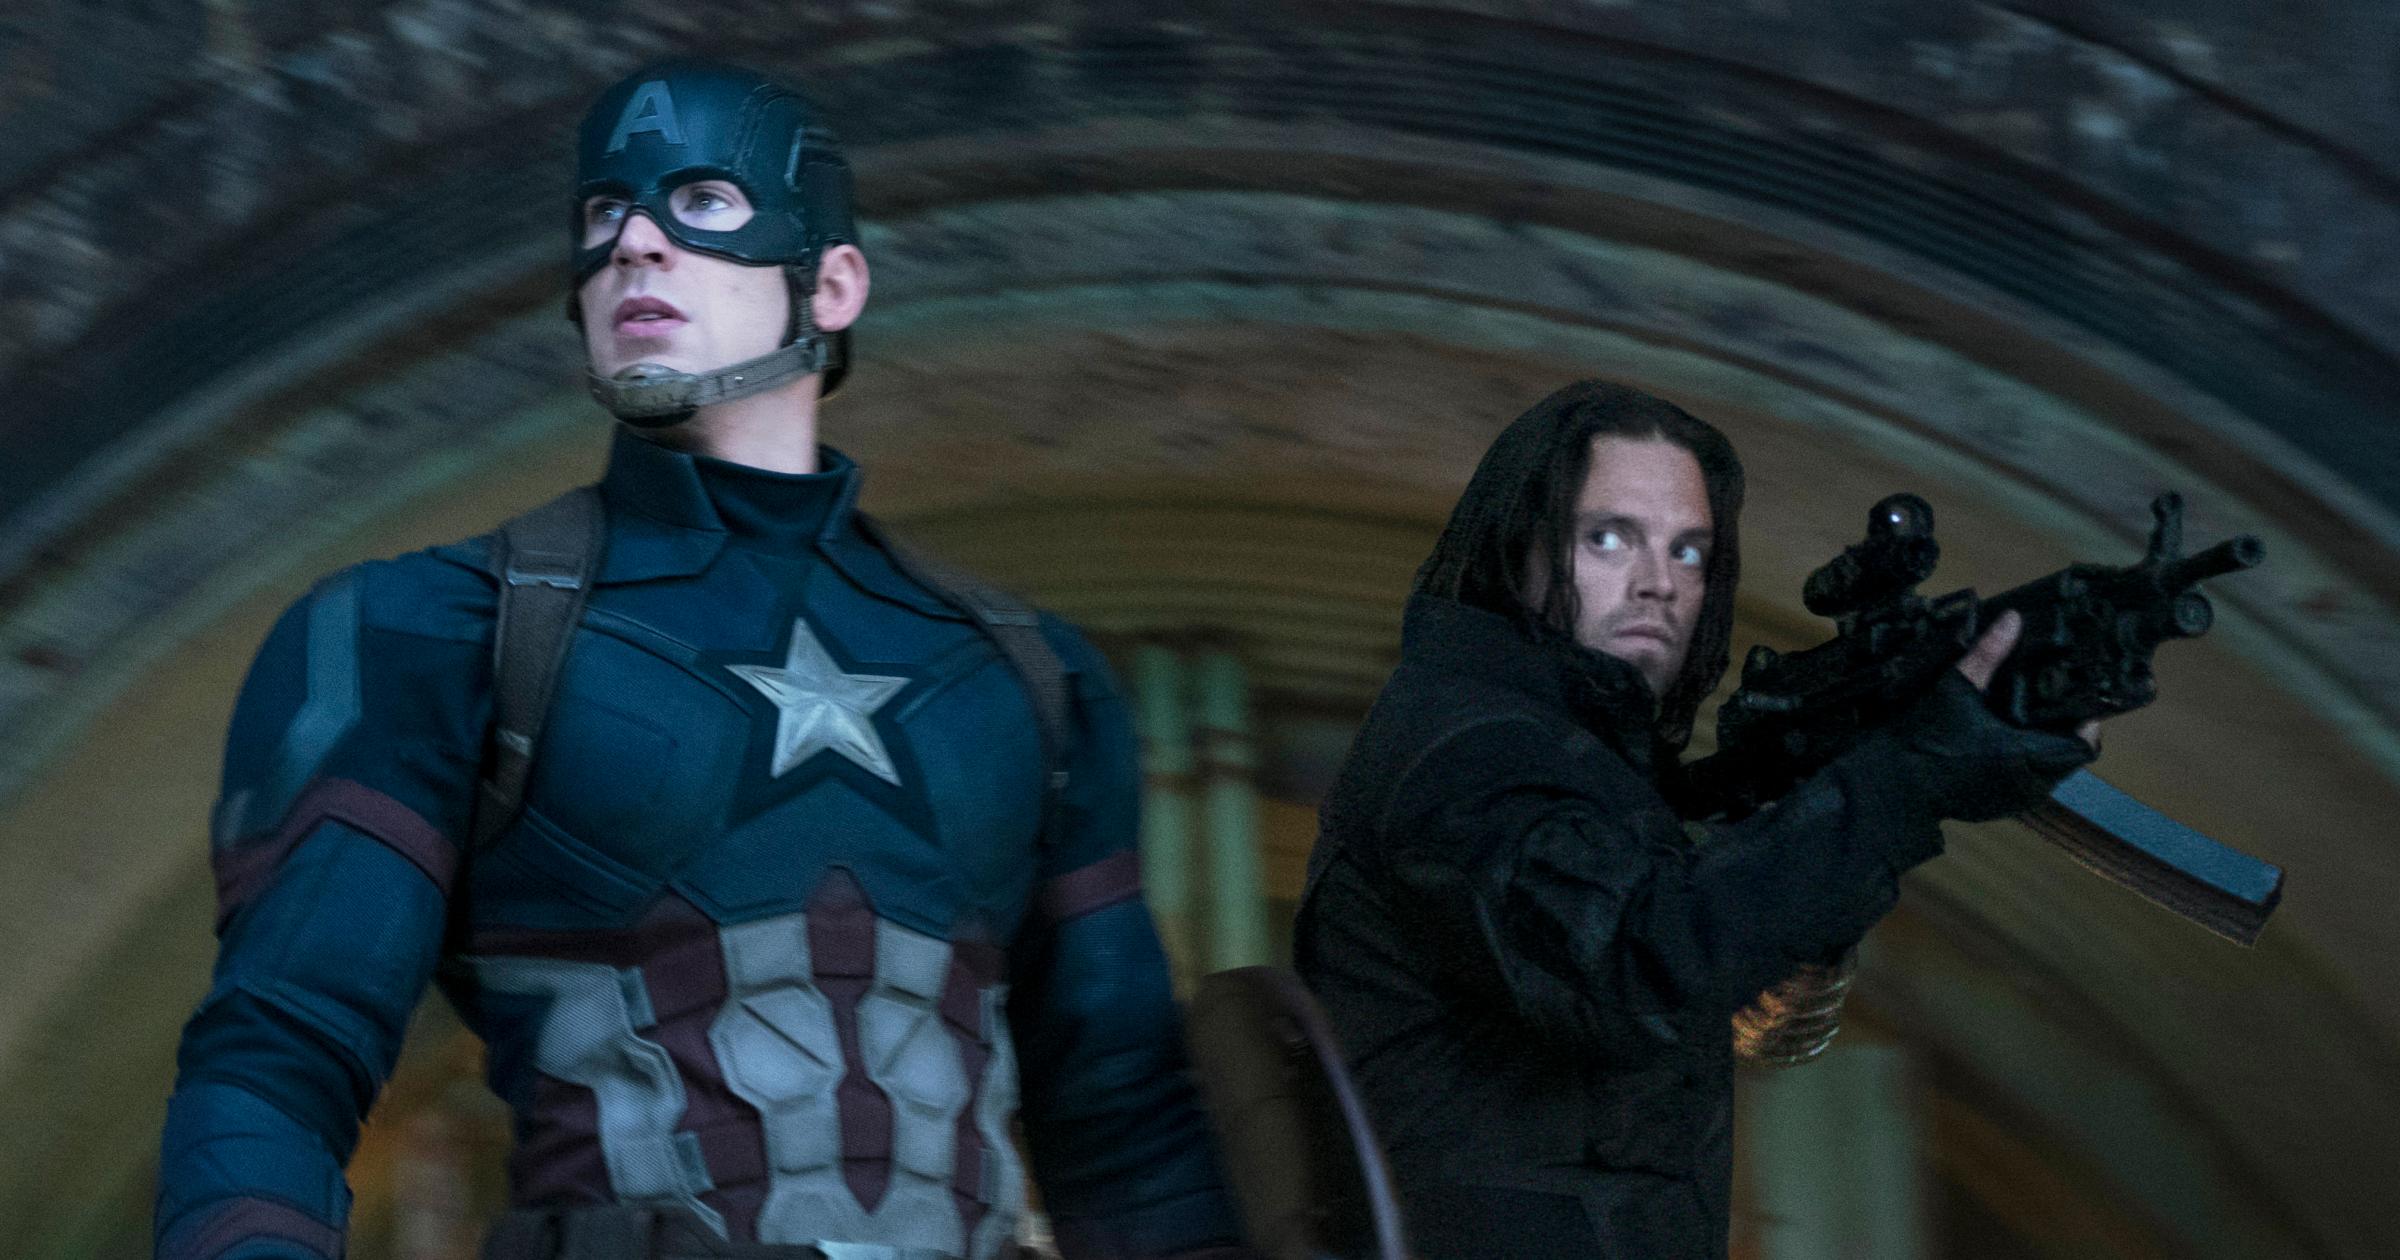 Chris Evans as Captain America/Steve Rogers and Sebastian Stan as Winter Soldier/Bucky Barnes in Captain America: Civil War.